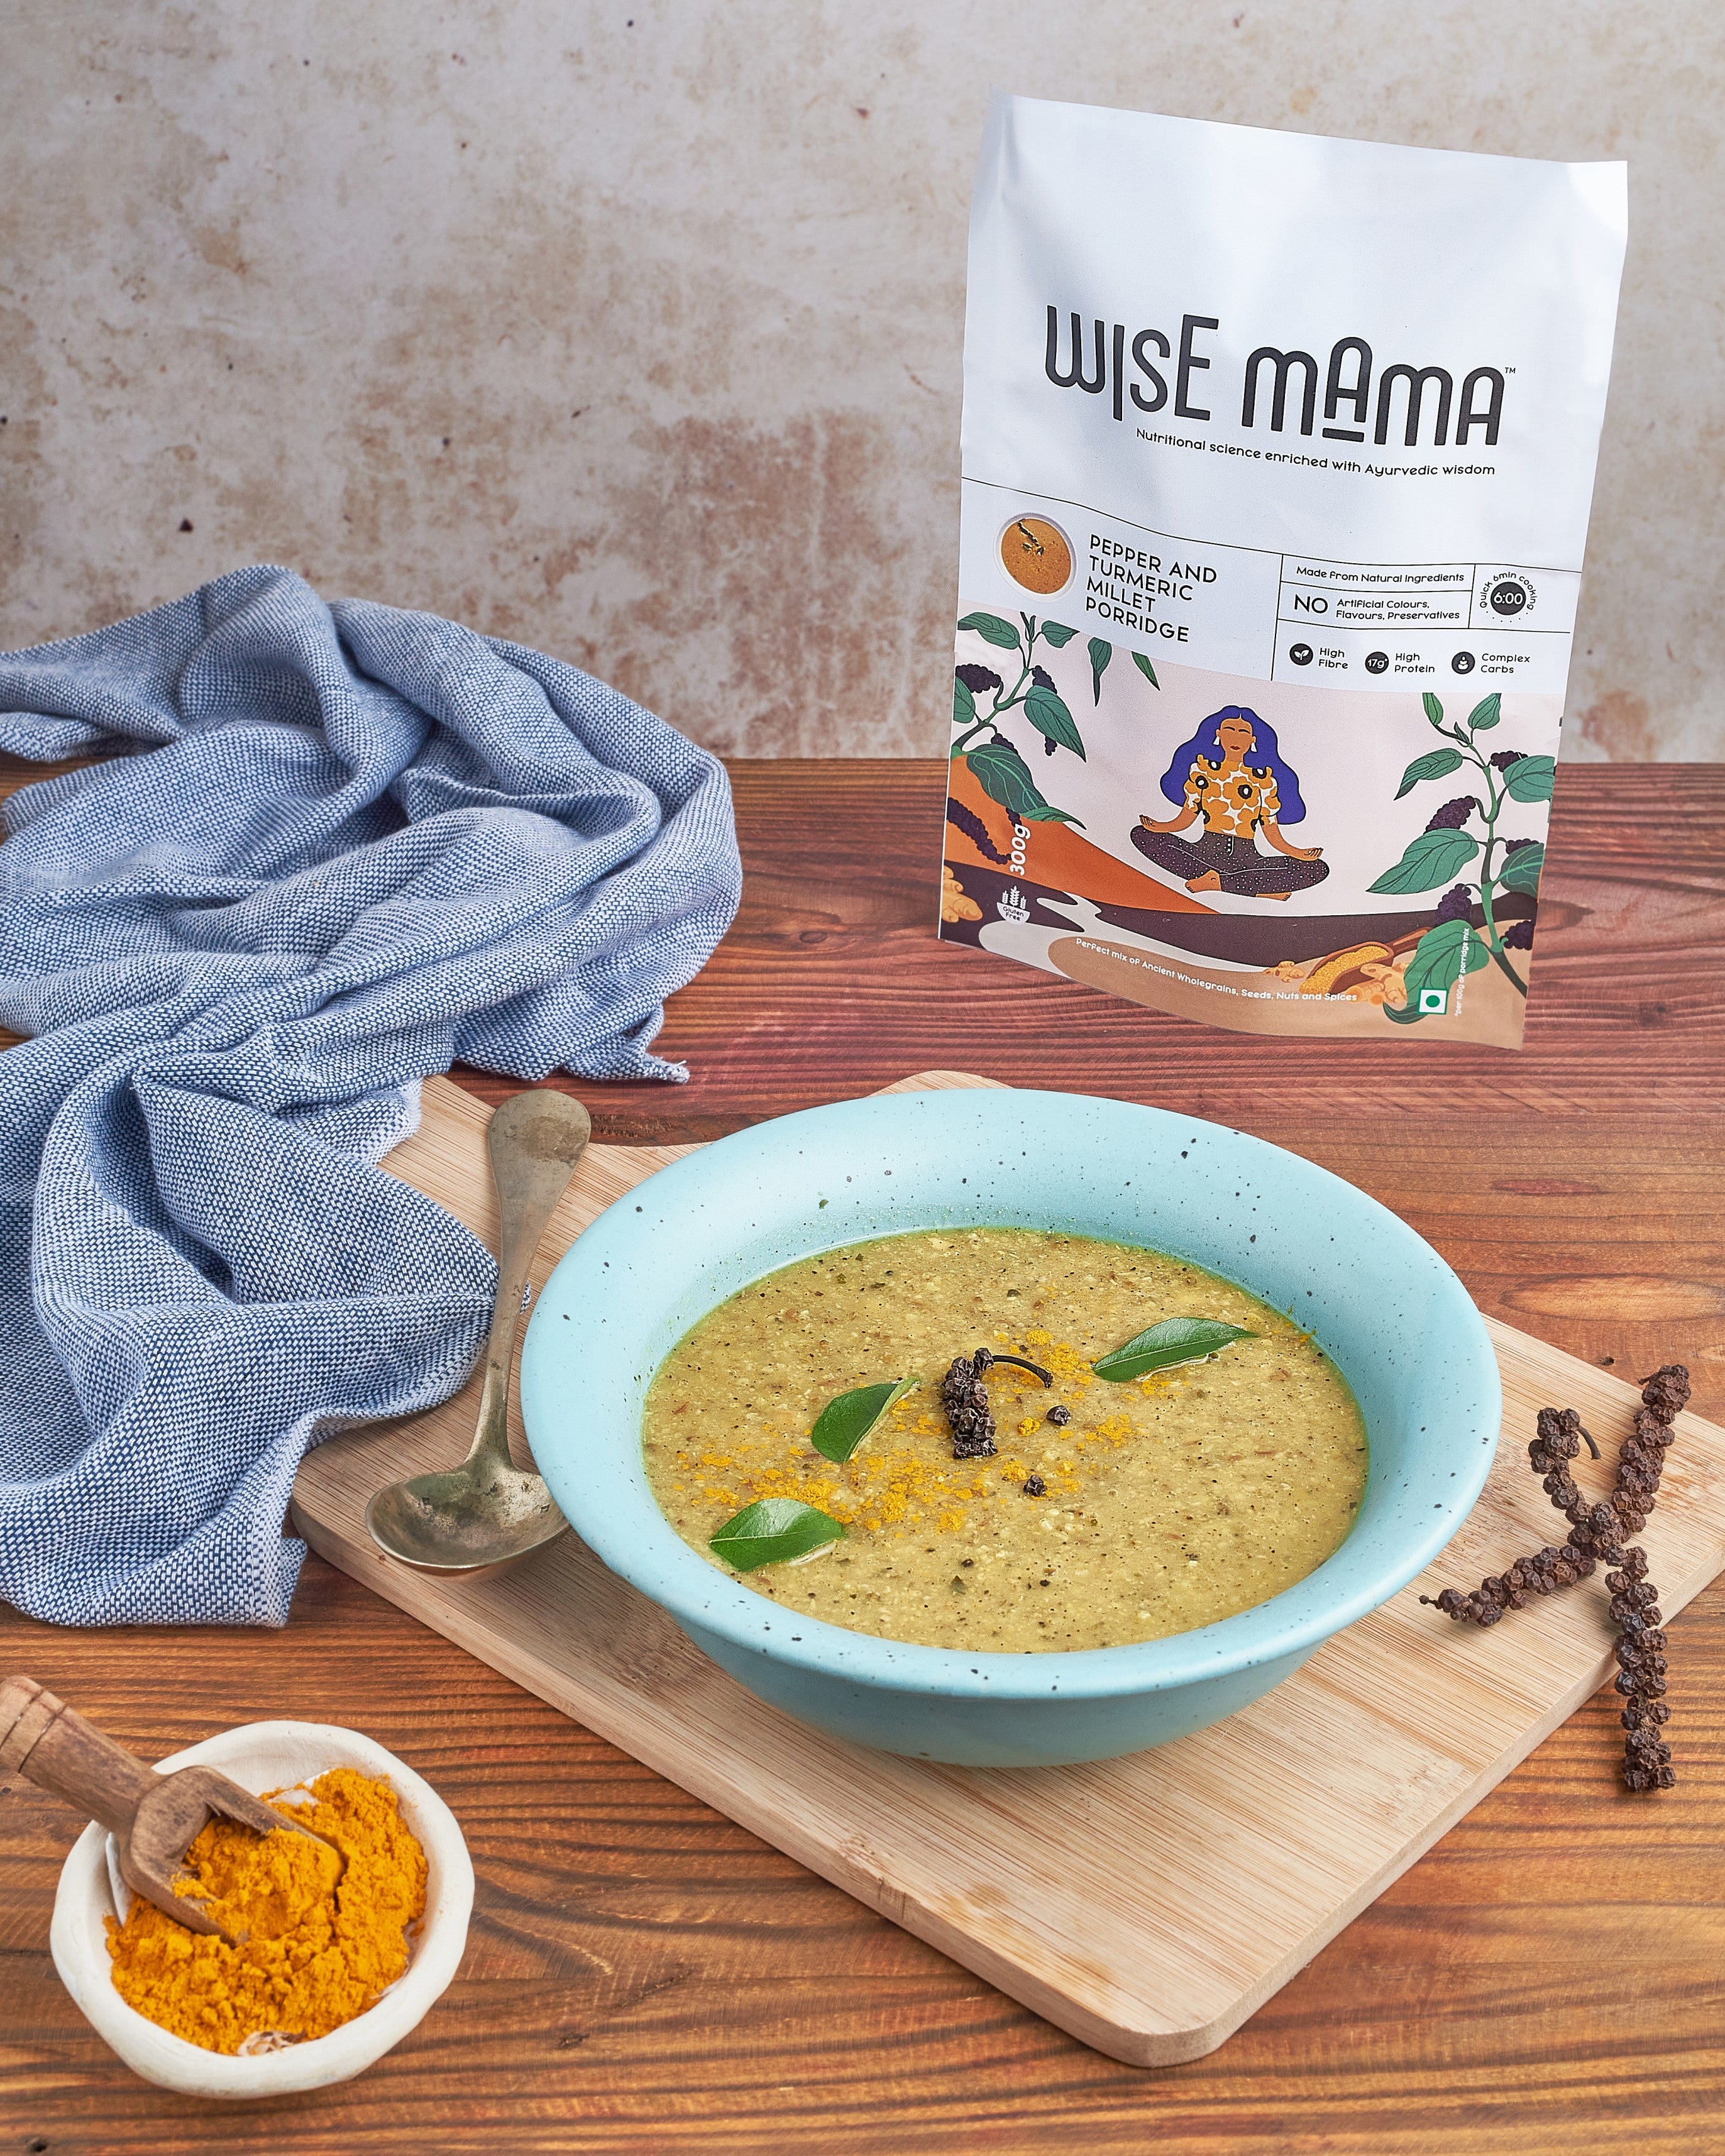 Wise Mama Millet Porridge | Pepper & Turmeric